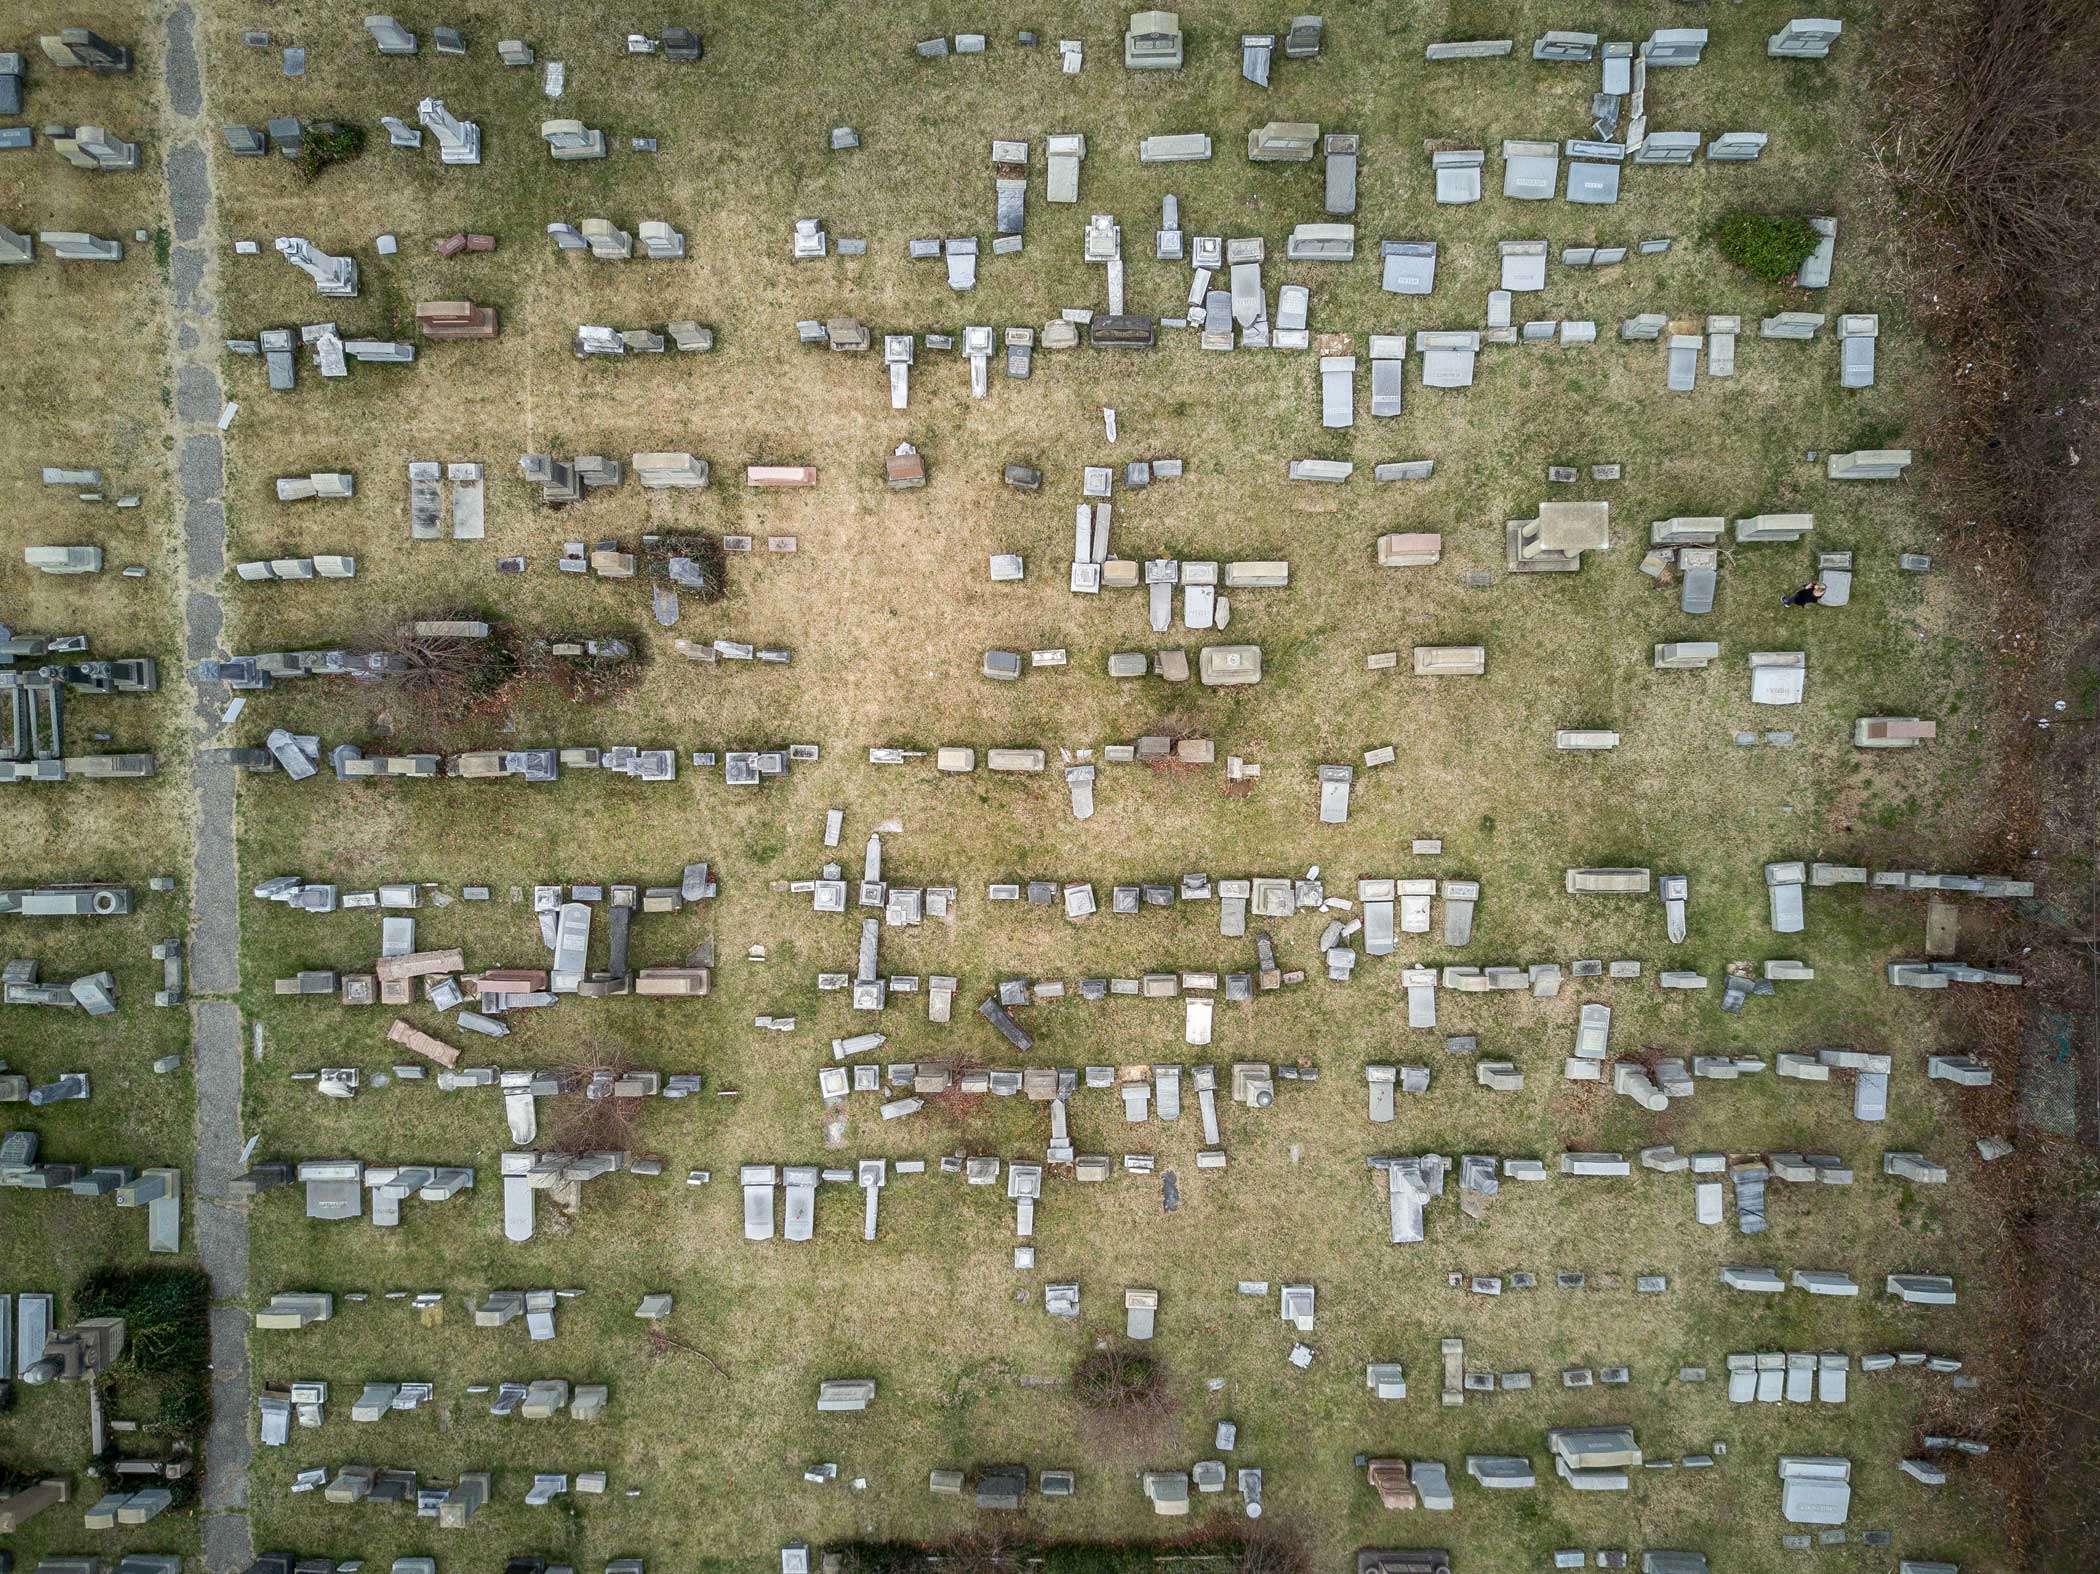 Jewish tombstones vandalized at Mount Carmel Cemetery on Feb. 28, 2017 in Philadelphia. (Charles Mostoller)